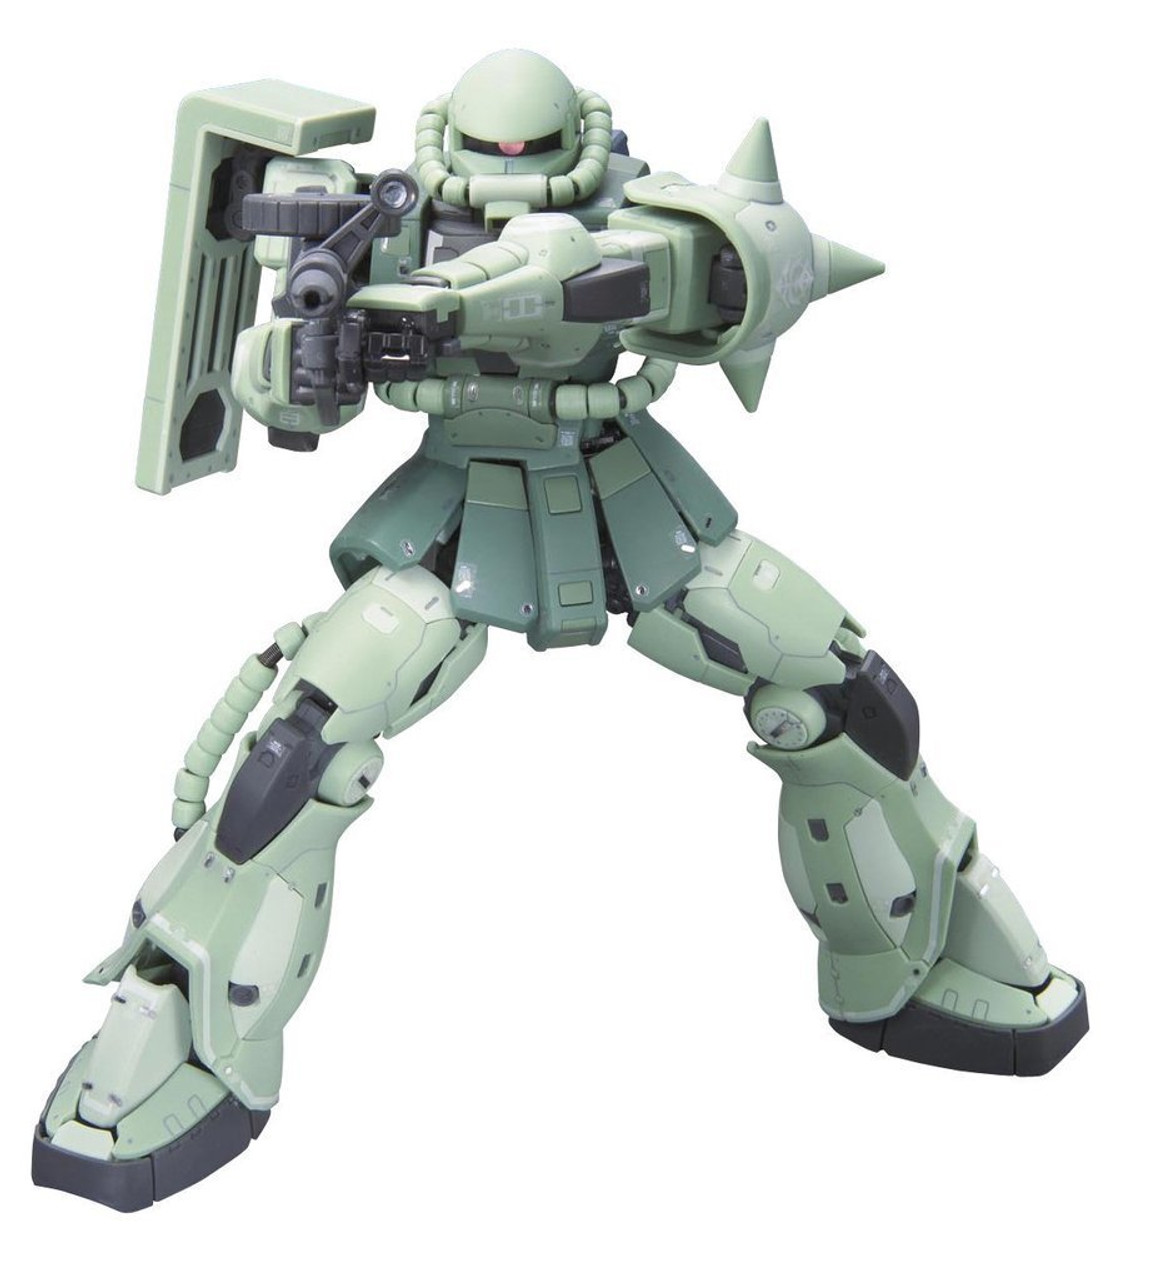 BAN2137102 Bandai RG #04 1/144 MS-06F Zaku II "Mobile Suit Gundam"